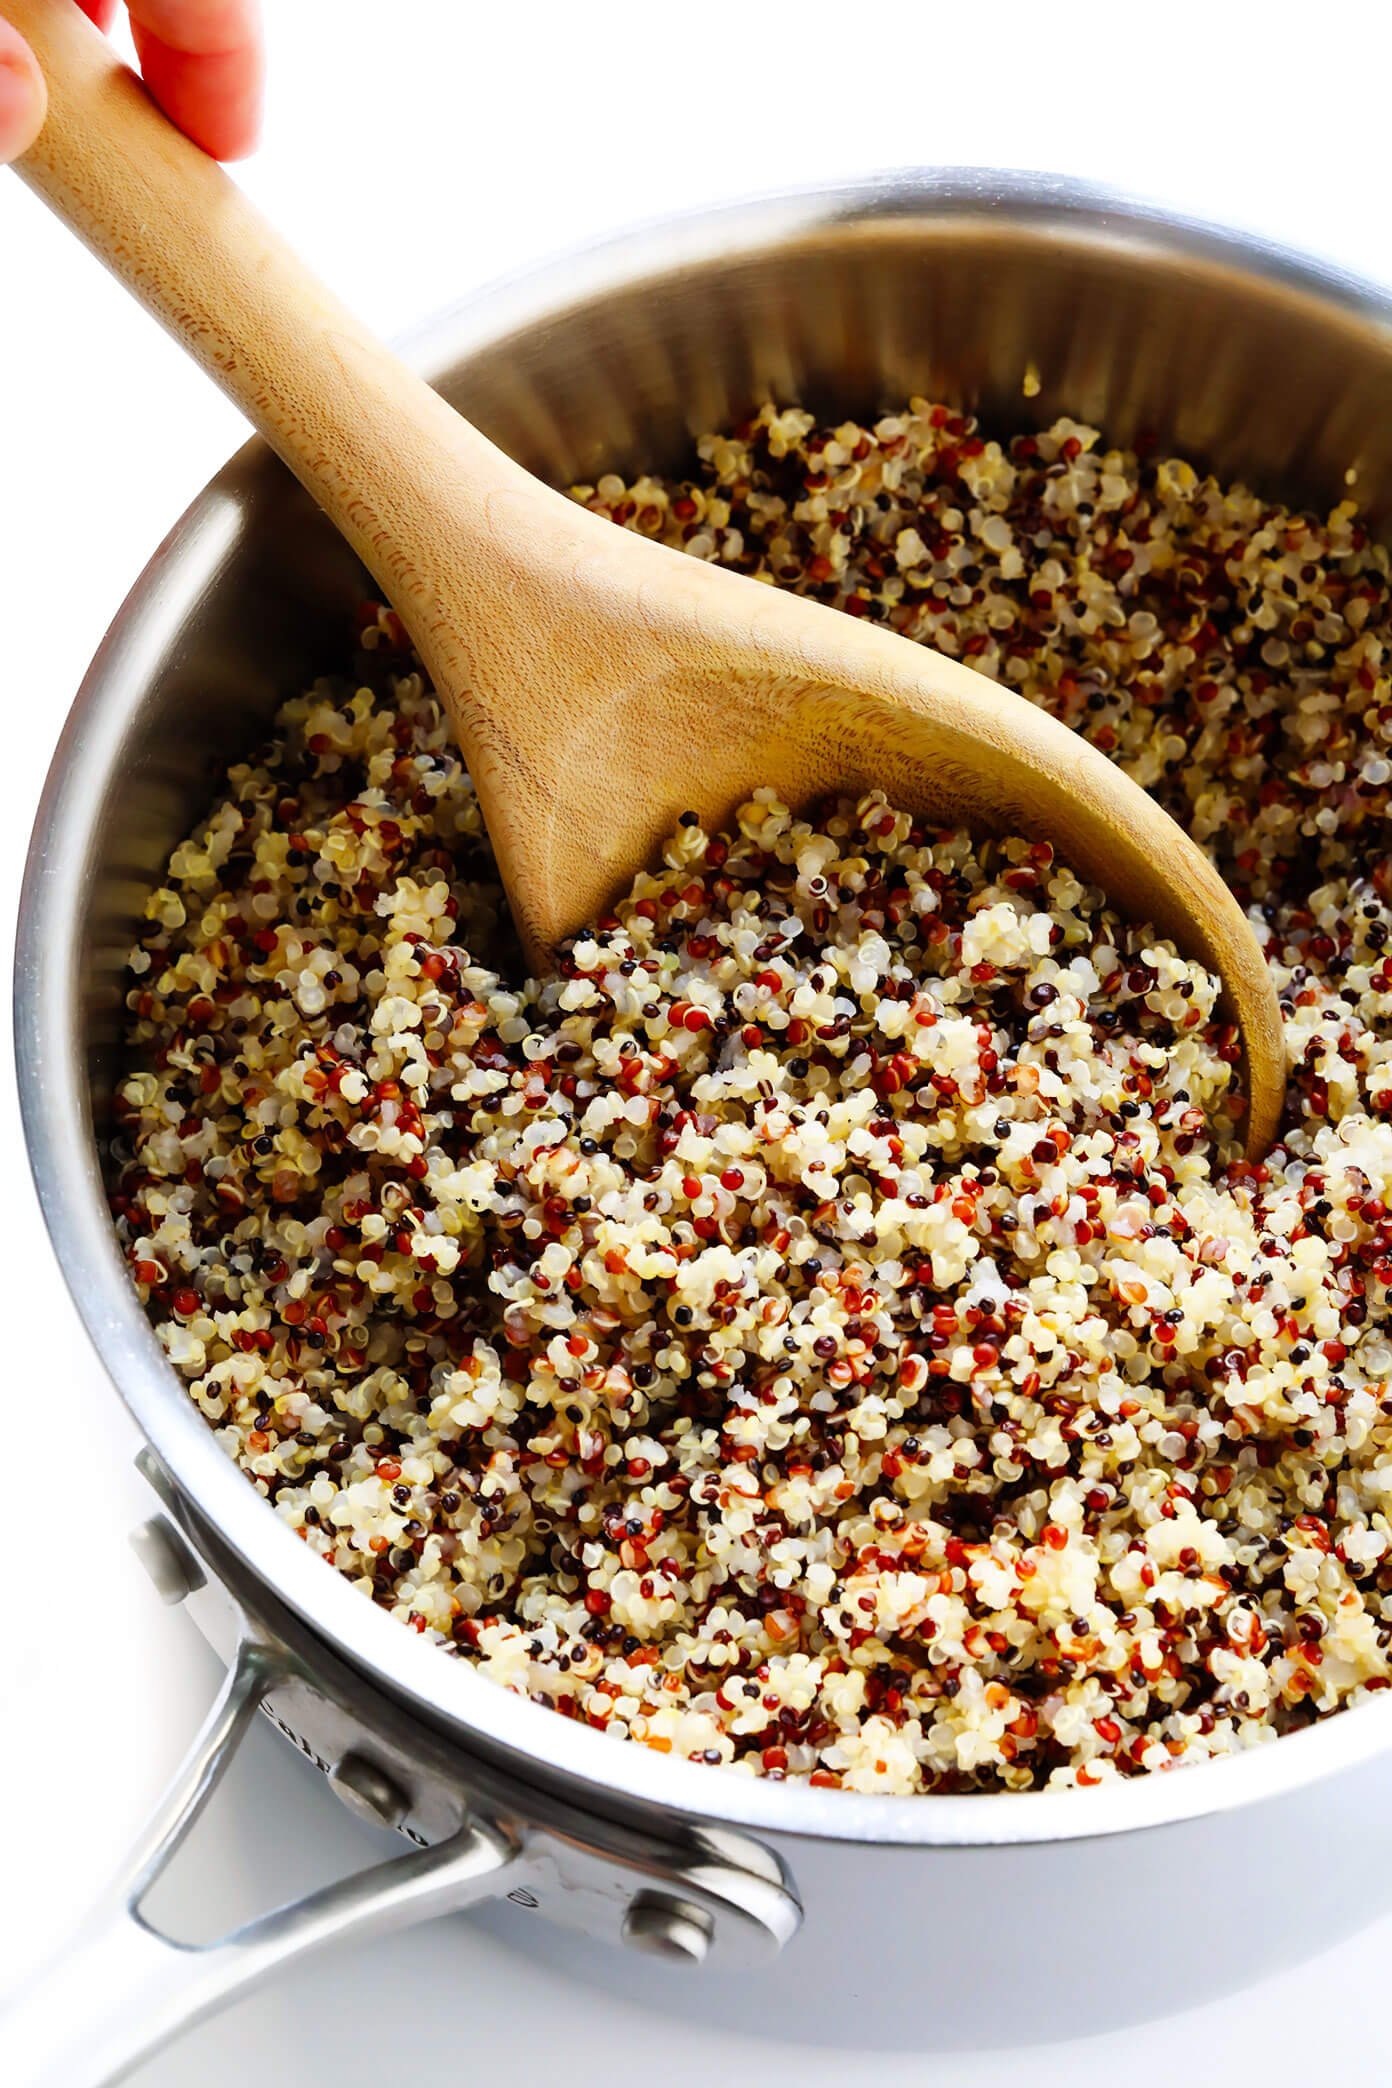 How to pronounce quinoa